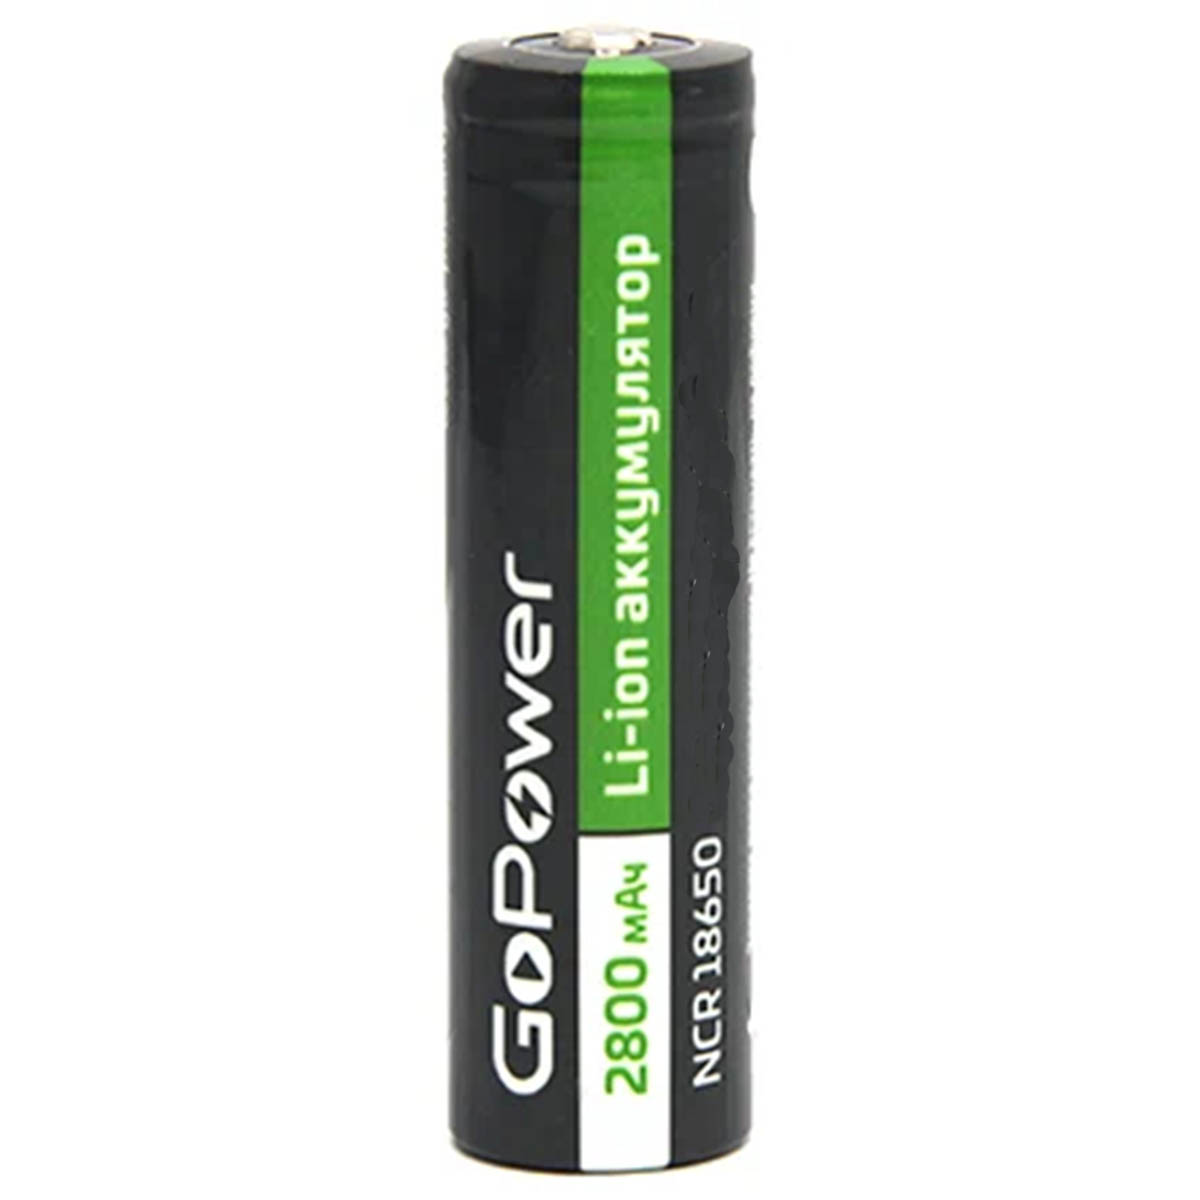 АКБ (аккумуляторная батарея) GoPower, IRC 18650, 3.7V, 2800 mAh